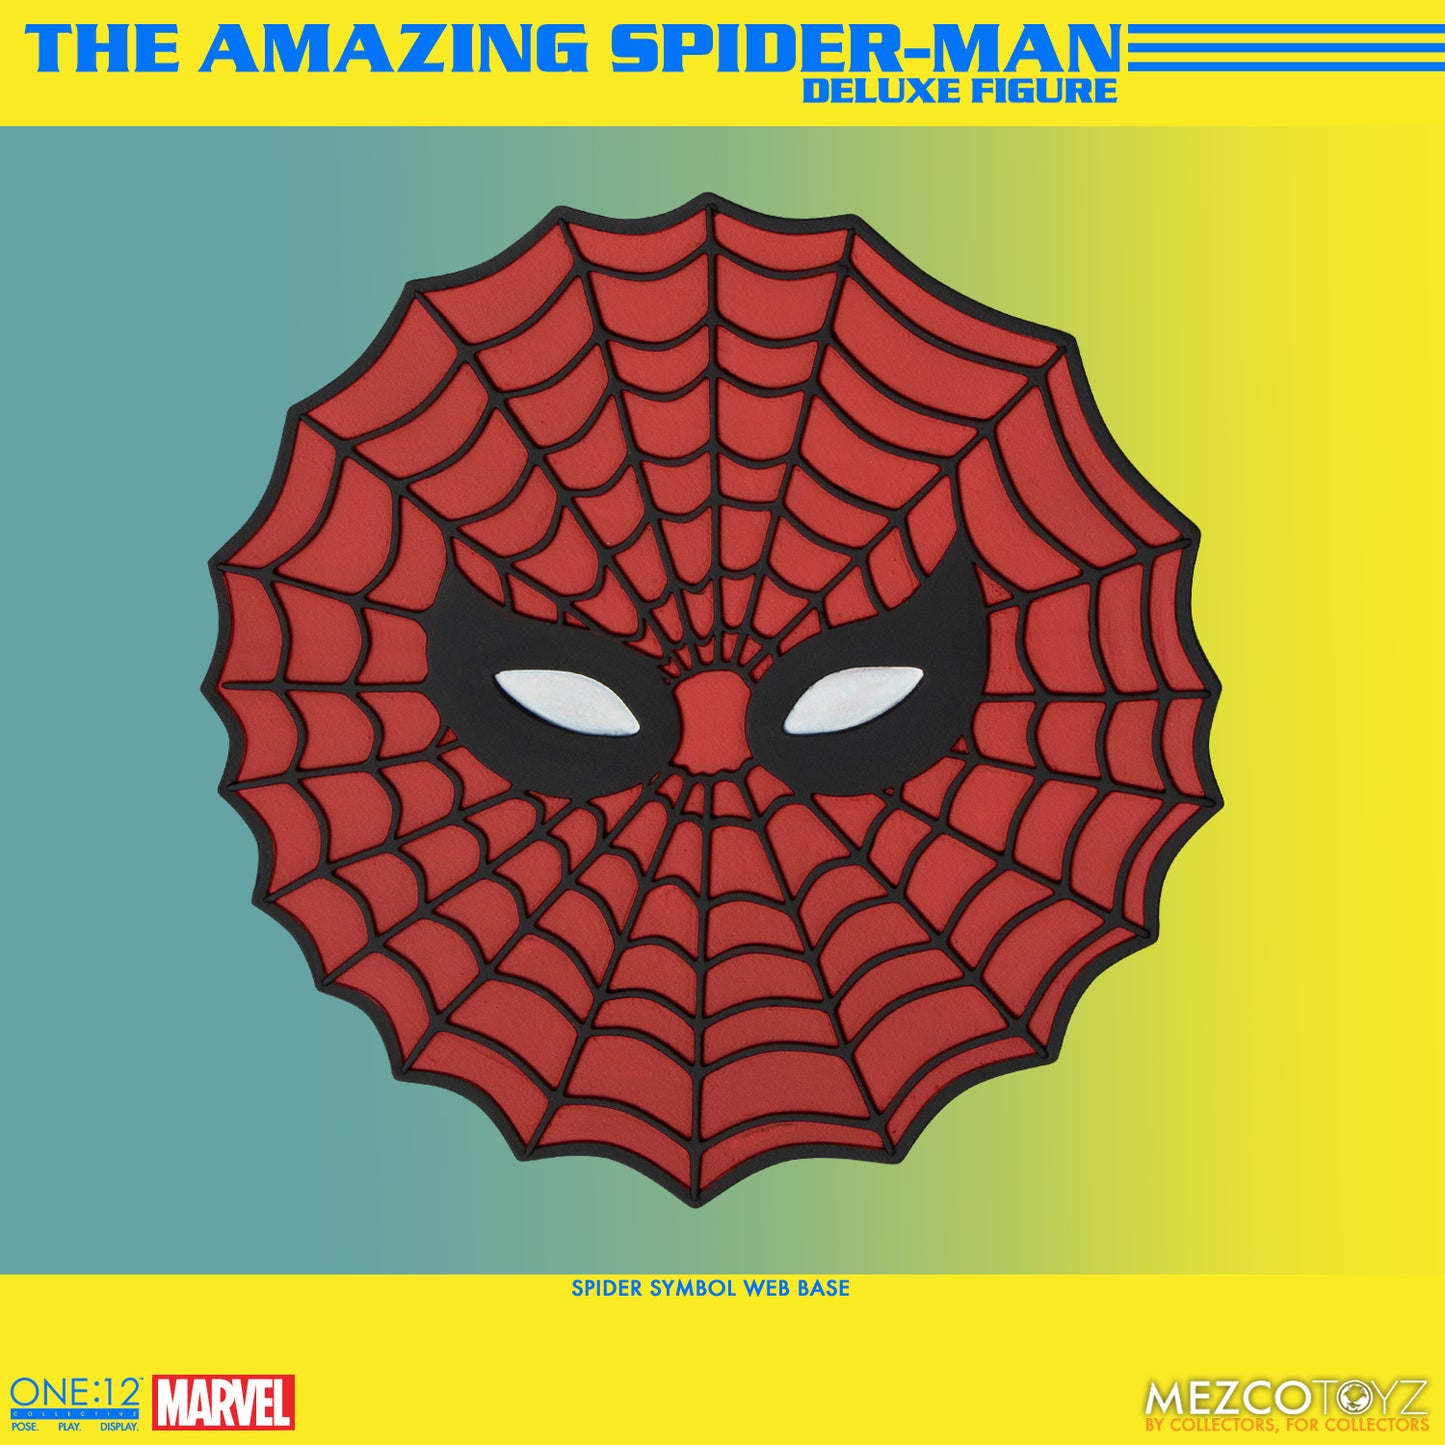 Marvel One:12 - Amazing Spider-Man Deluxe Set